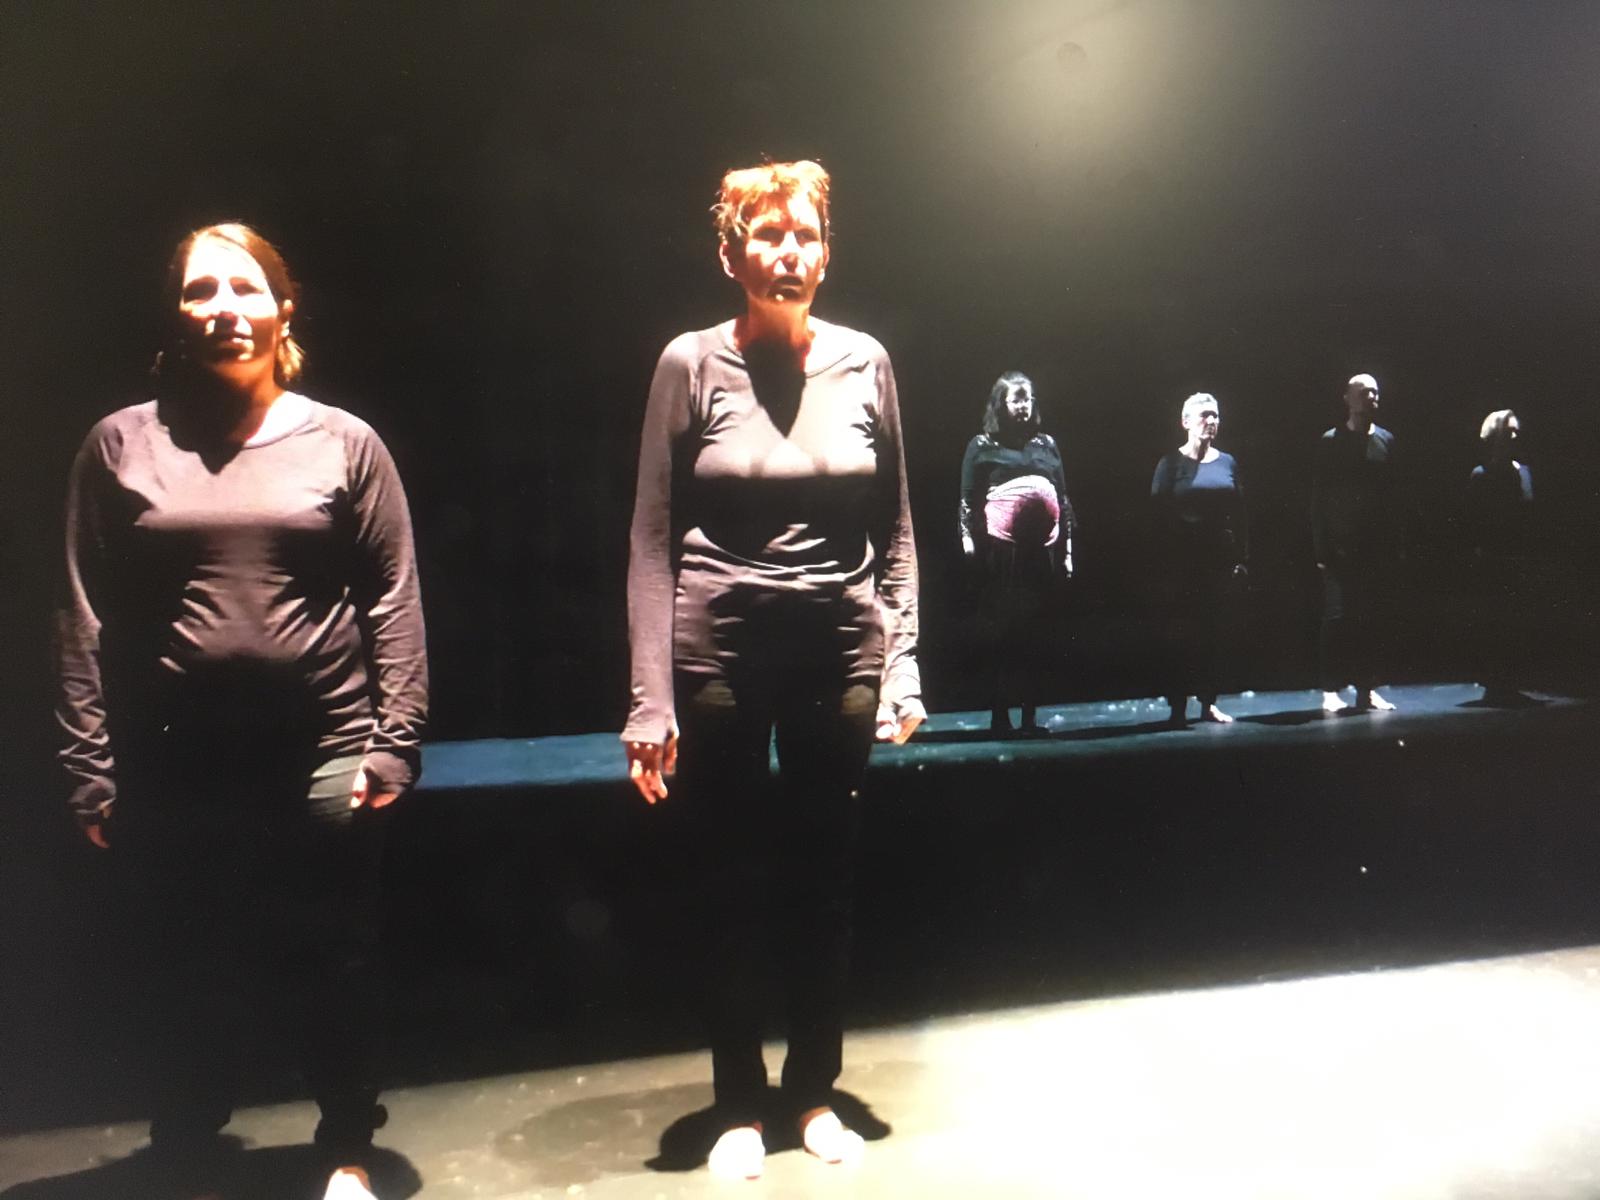 Grieks Toneelstuk Kunstklas Theater Kottenpark Enschede eindexamenvoorstelling Carole van Ruitenbeek